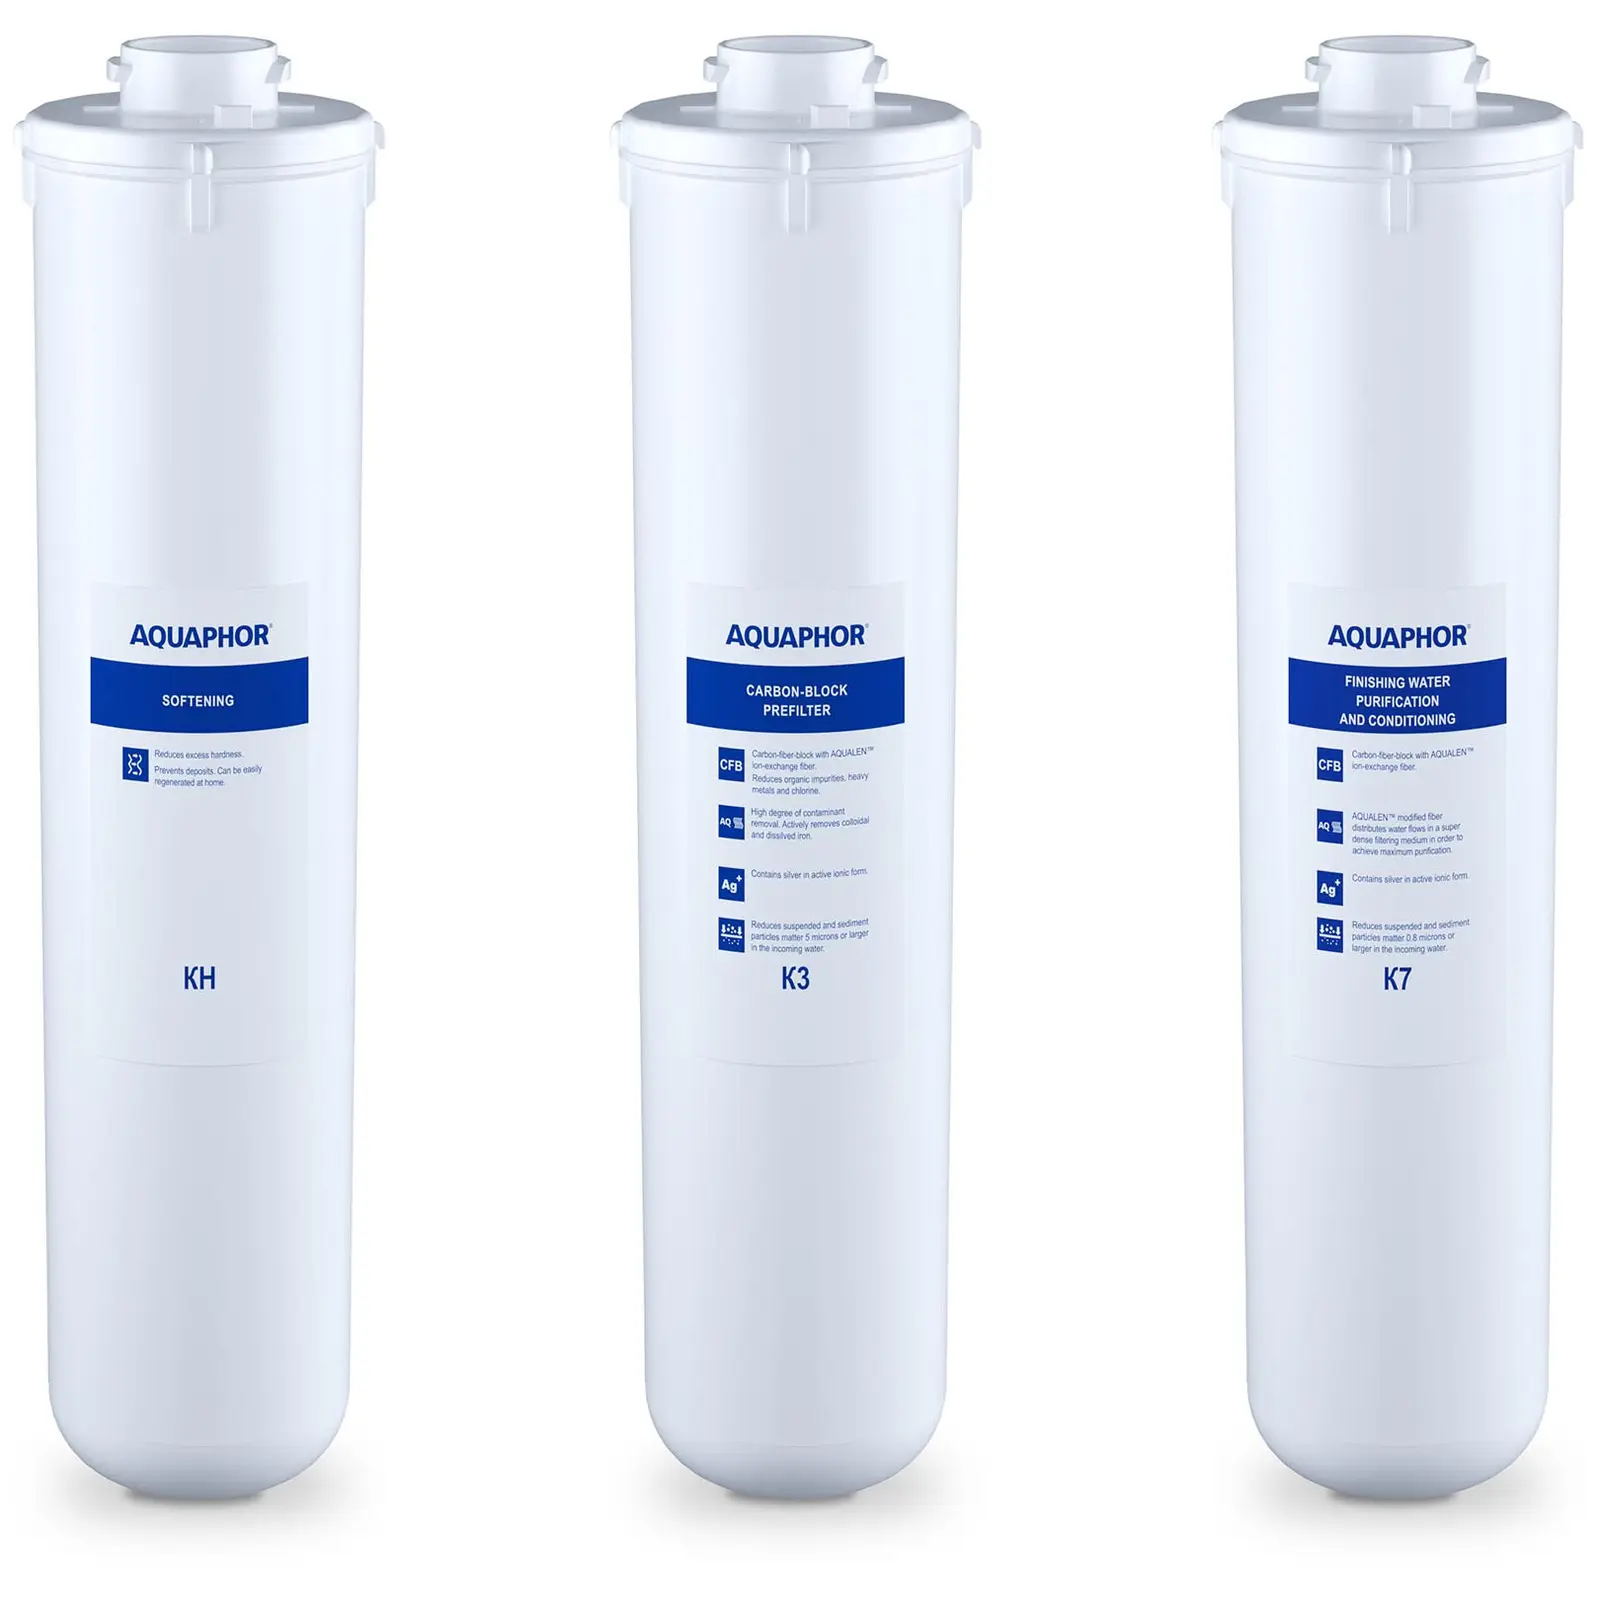 Aquaphor Activated Carbon Filter for Water - ανταλλακτικό σετ φίλτρων με μαλακτικό